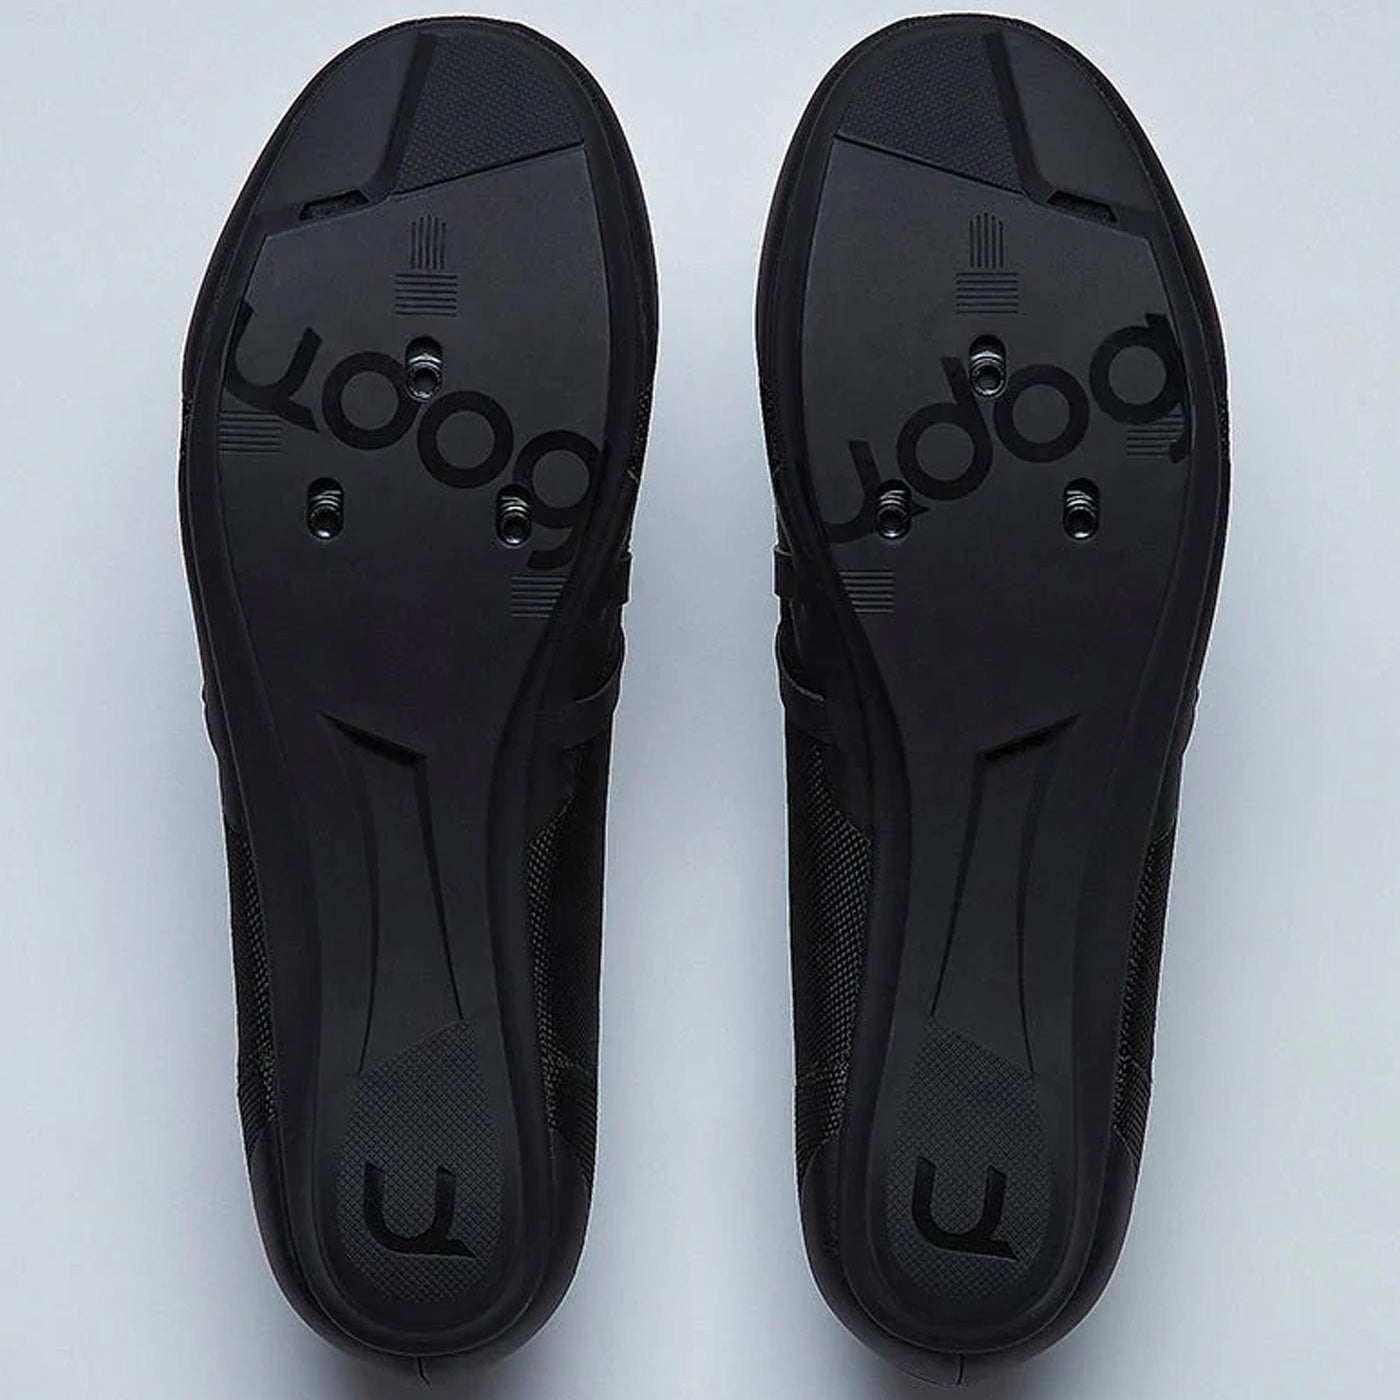 Udog Tensione shoes - Black